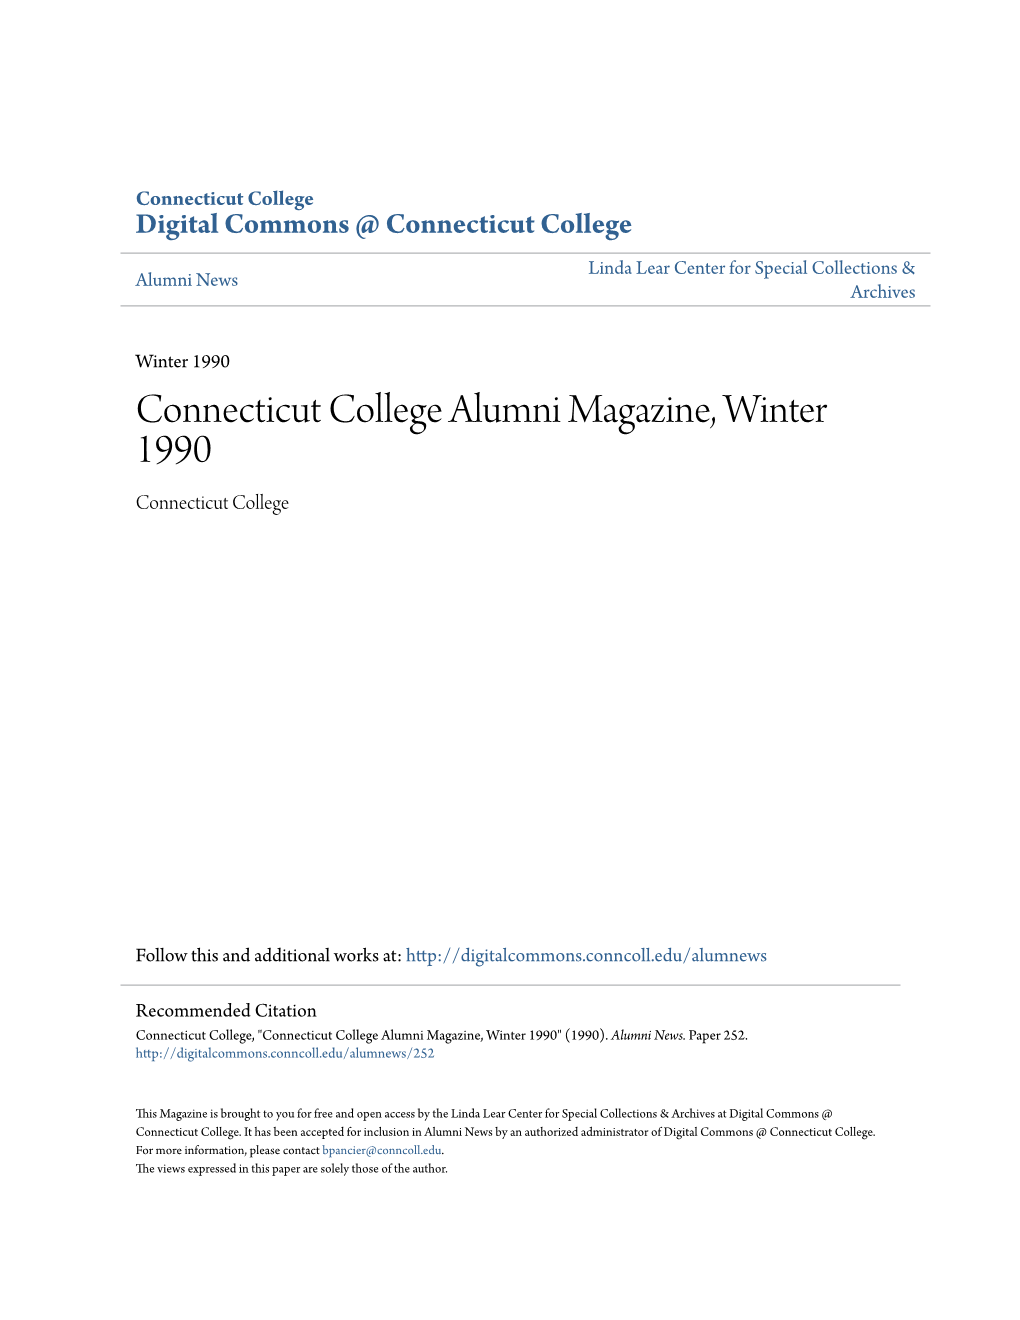 Connecticut College Alumni Magazine, Winter 1990 Connecticut College